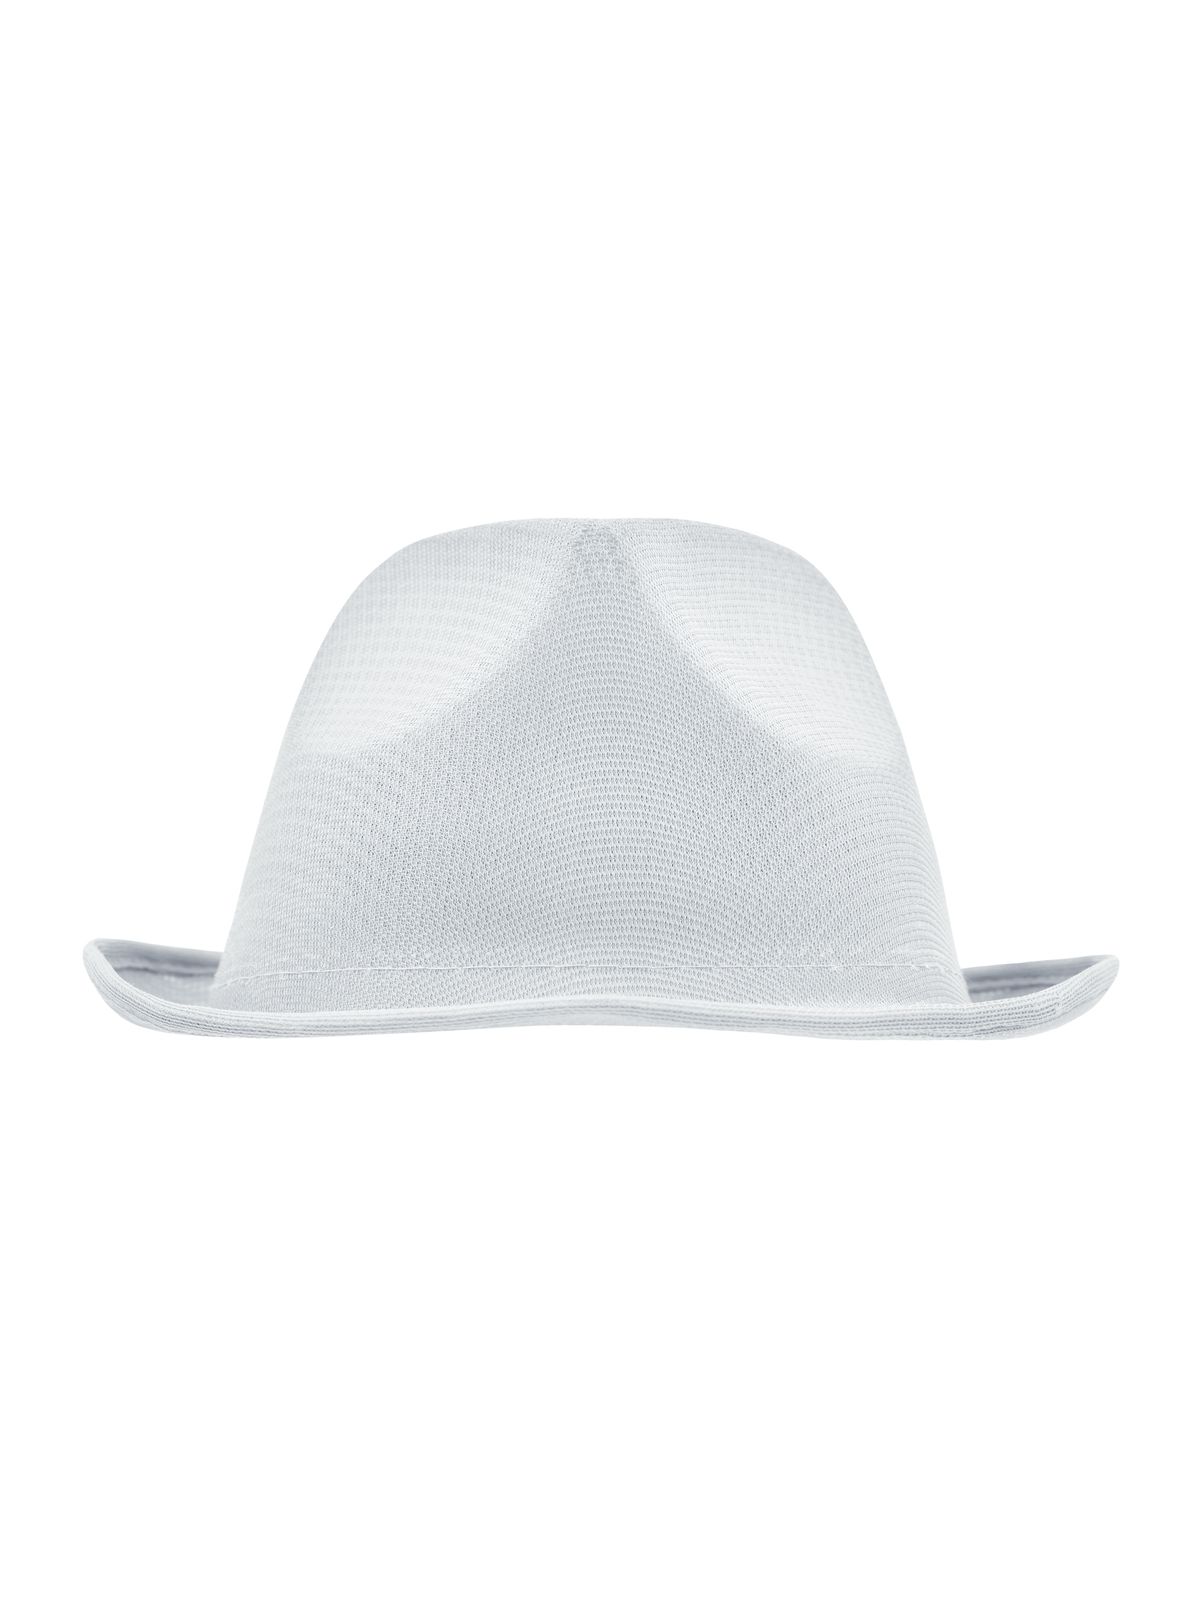 promotion-hat-white.webp